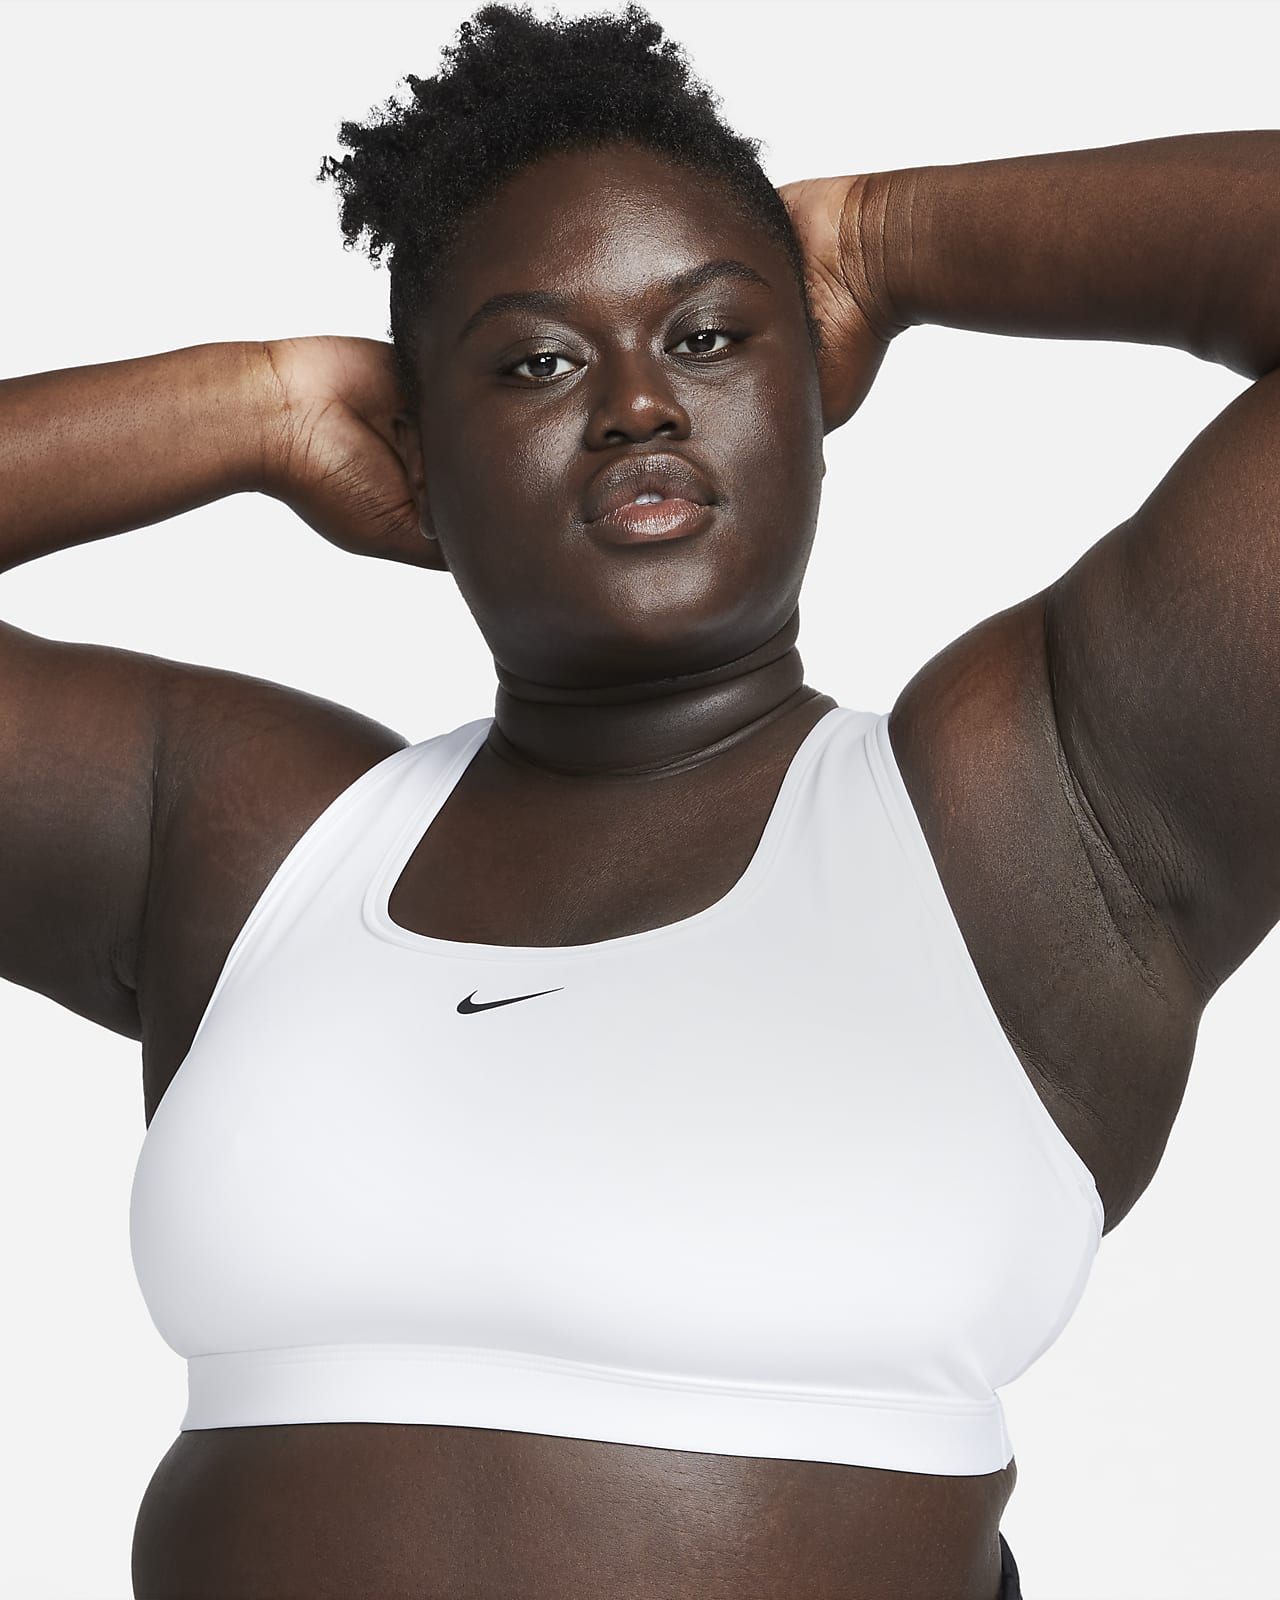 Nike Swoosh Light Support Women's Non-Padded Sports Bra (Plus Size).